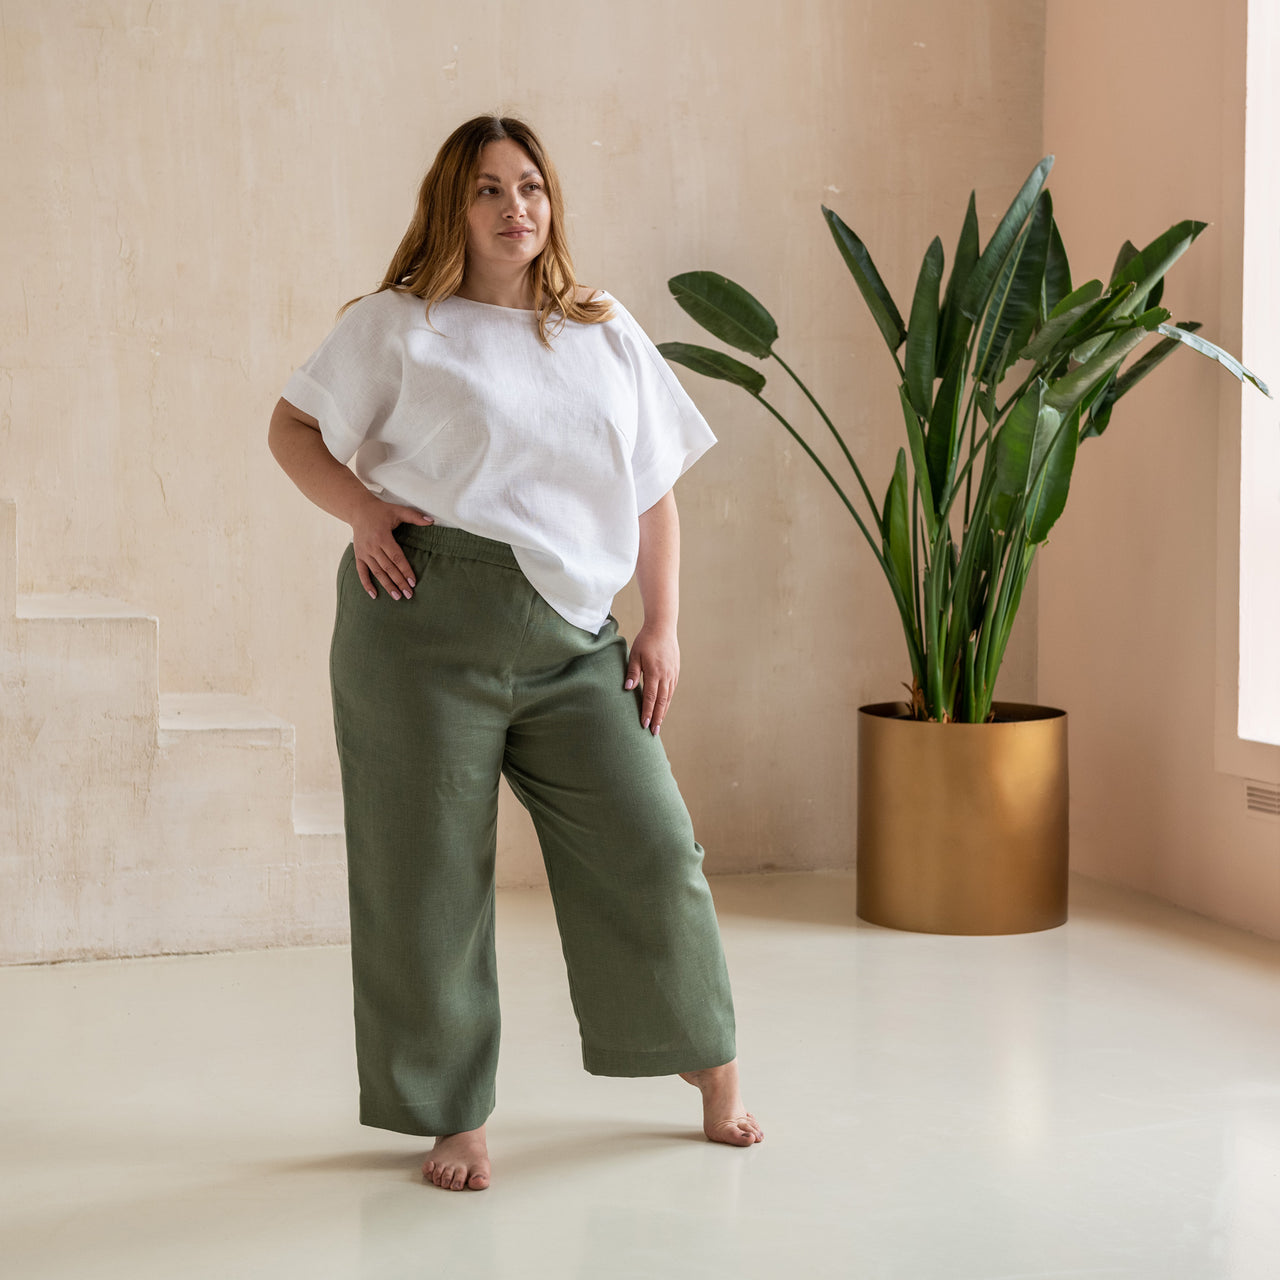 Women's Natural Linen Pants – High Waist, Plus Size Linen Pants